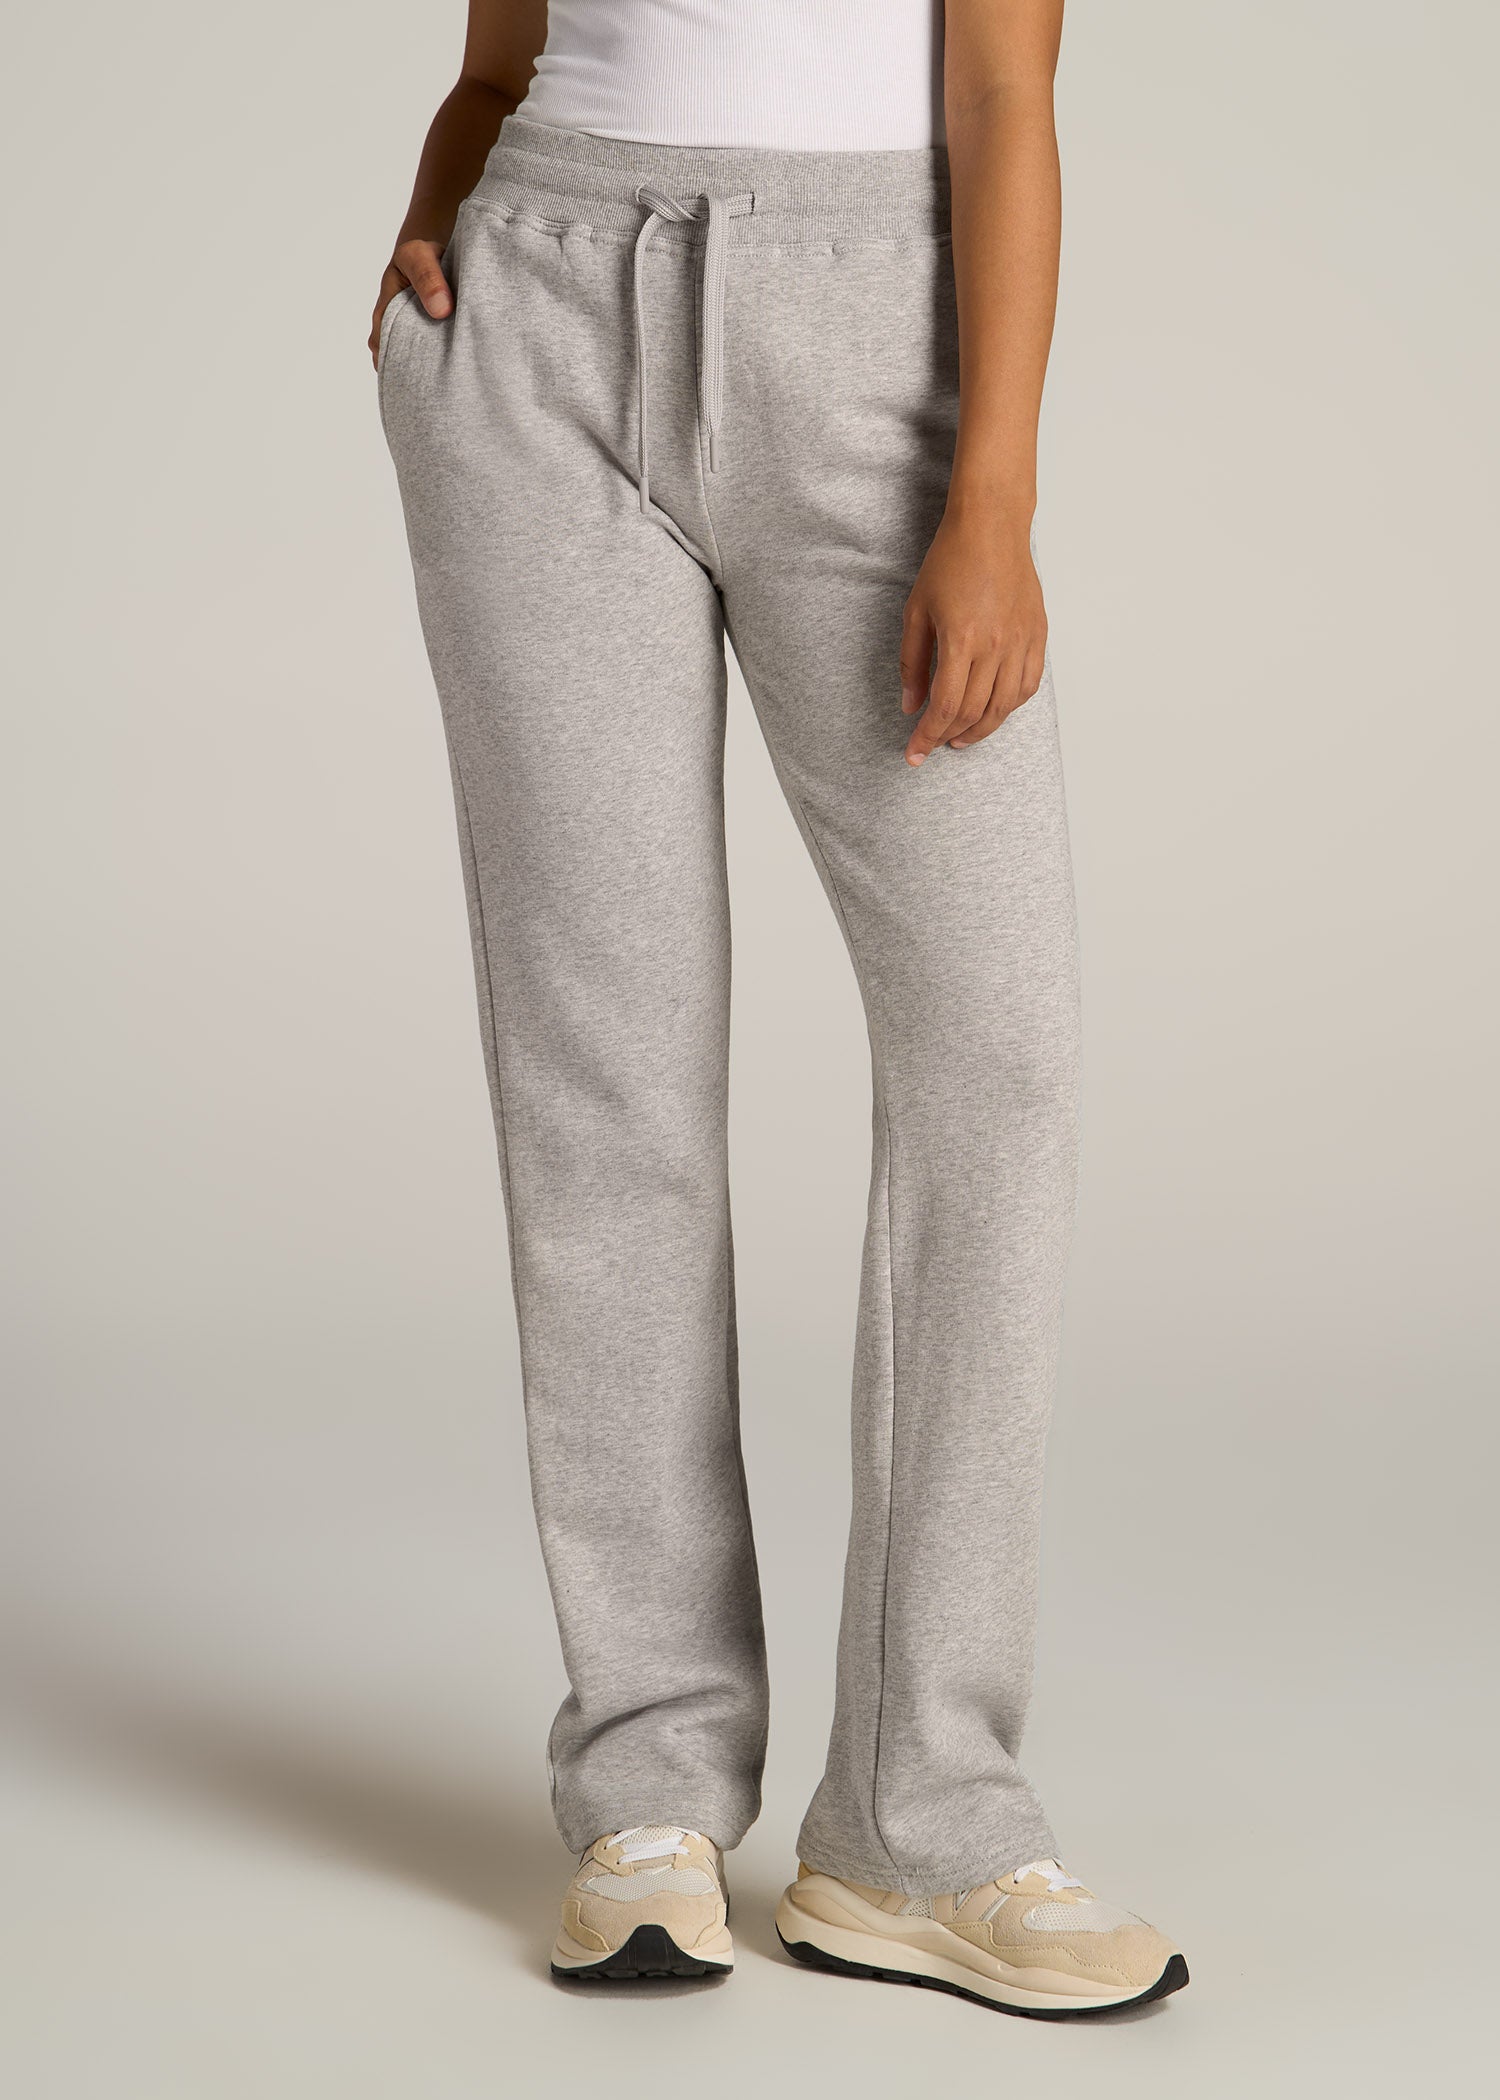 Grey Sweatpants for Tall Women: Fleece Open Bottom Pants